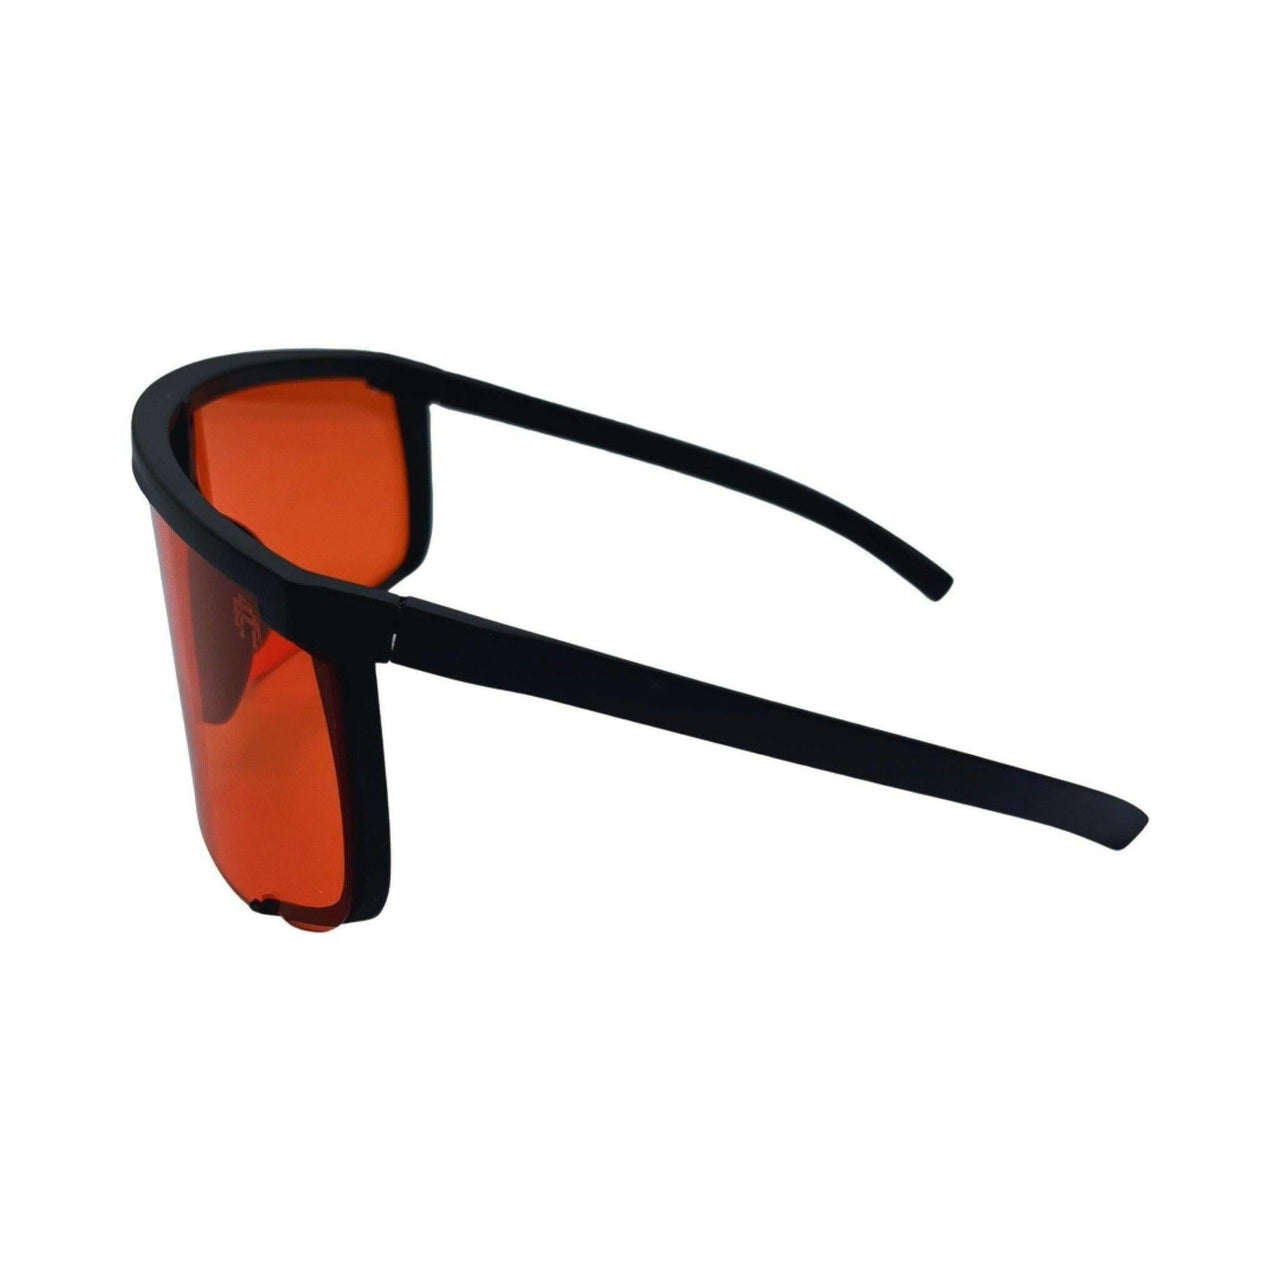 Steezy Red Transparent Sunglasses - Rebel Reaper Clothing CompanySunglasses